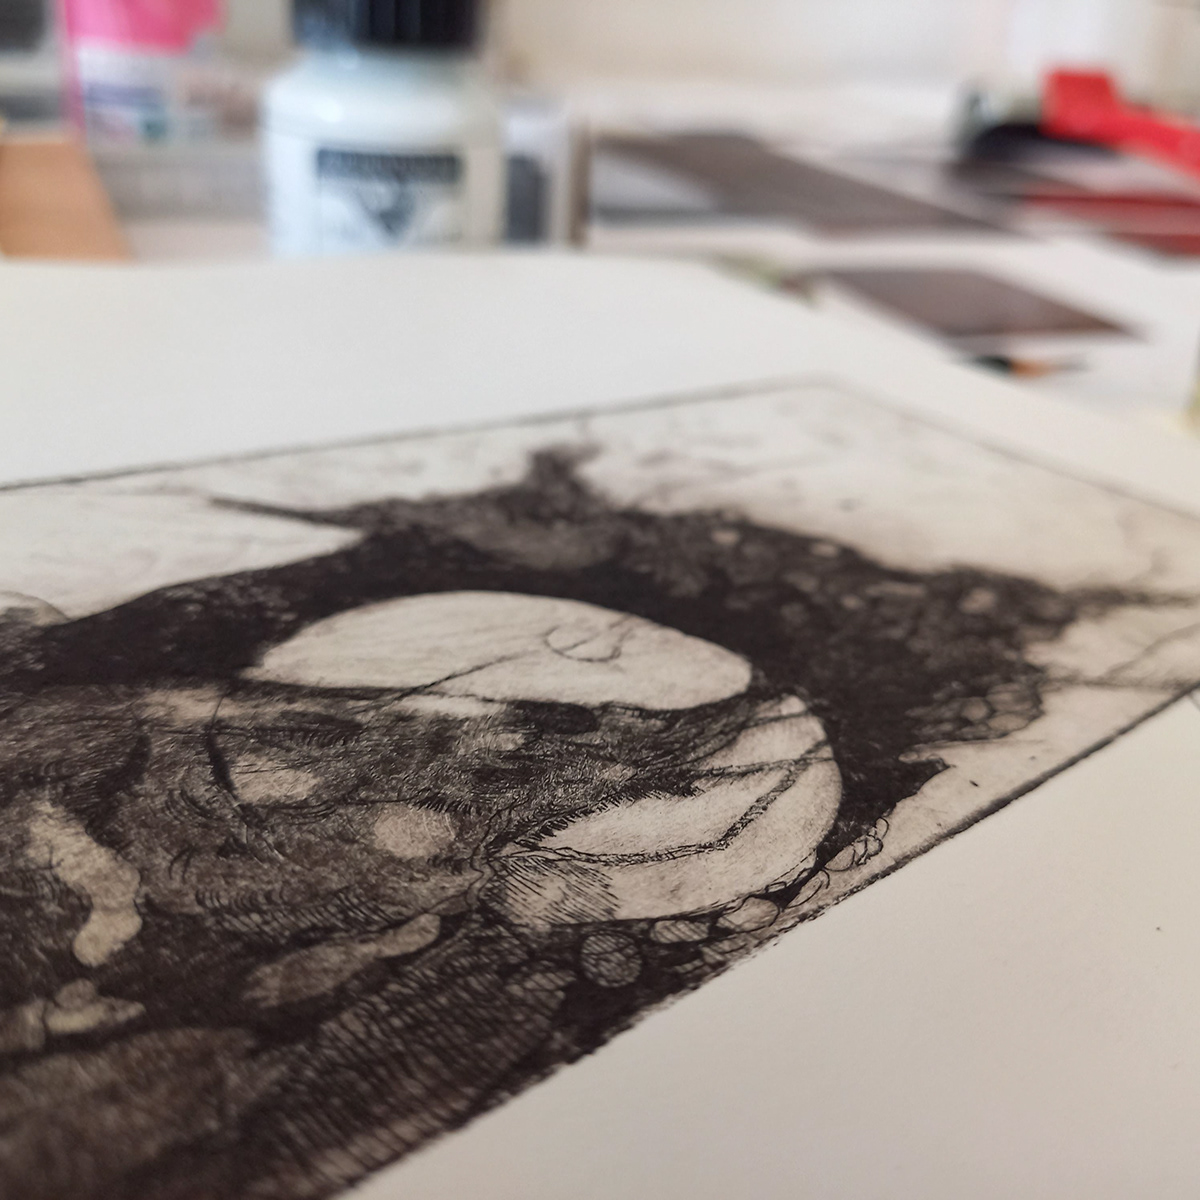 #copperplate #drawing #etching #intaglio #printmaking  #SeaLife #Sepia